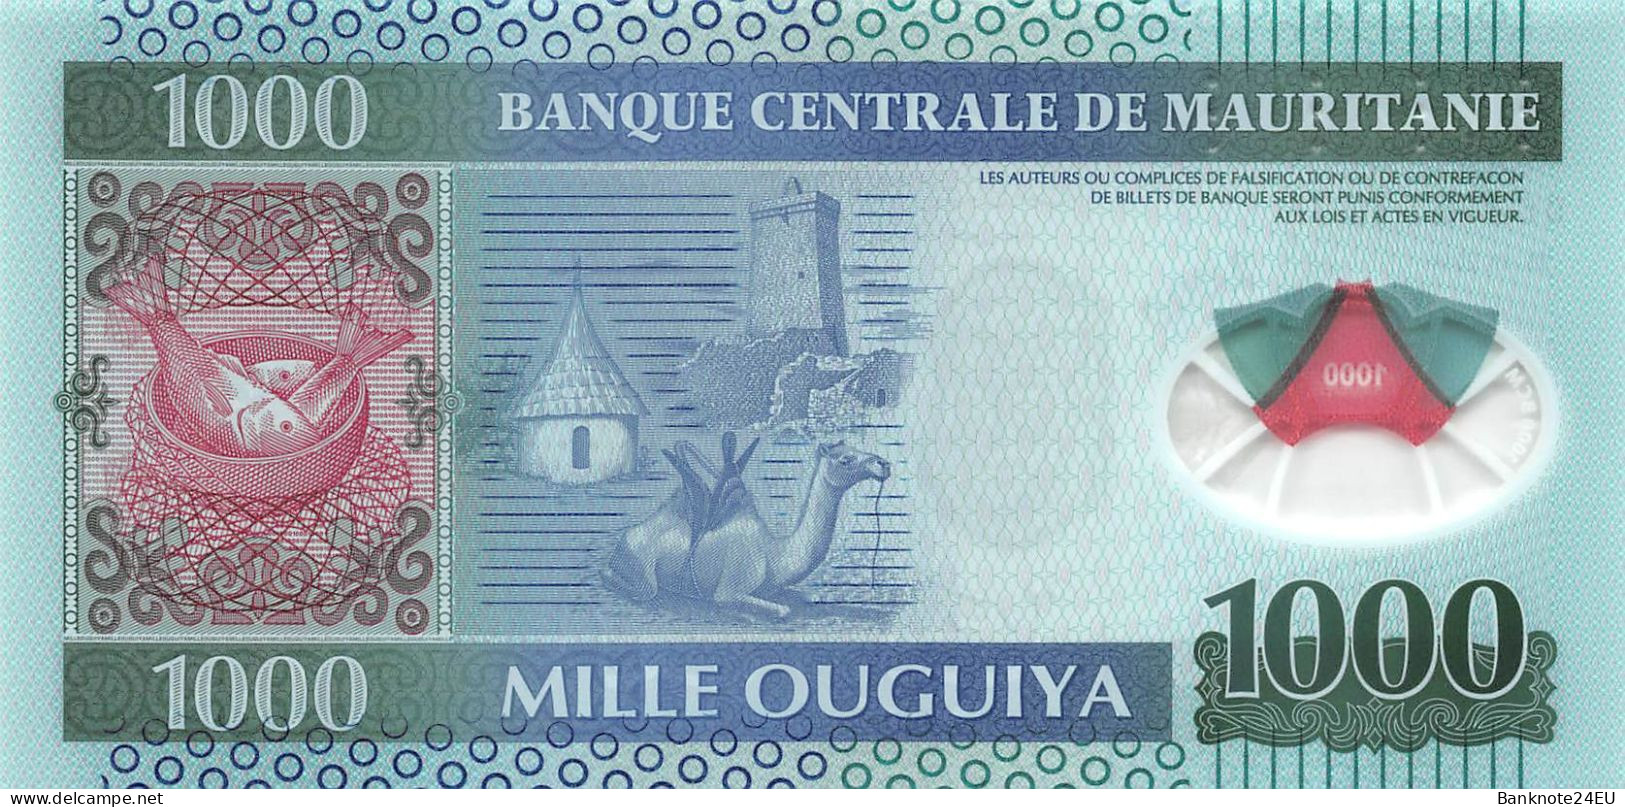 Mauritania 1000 Ouguiya 2014 Unc Pn 19 - Mauritanie